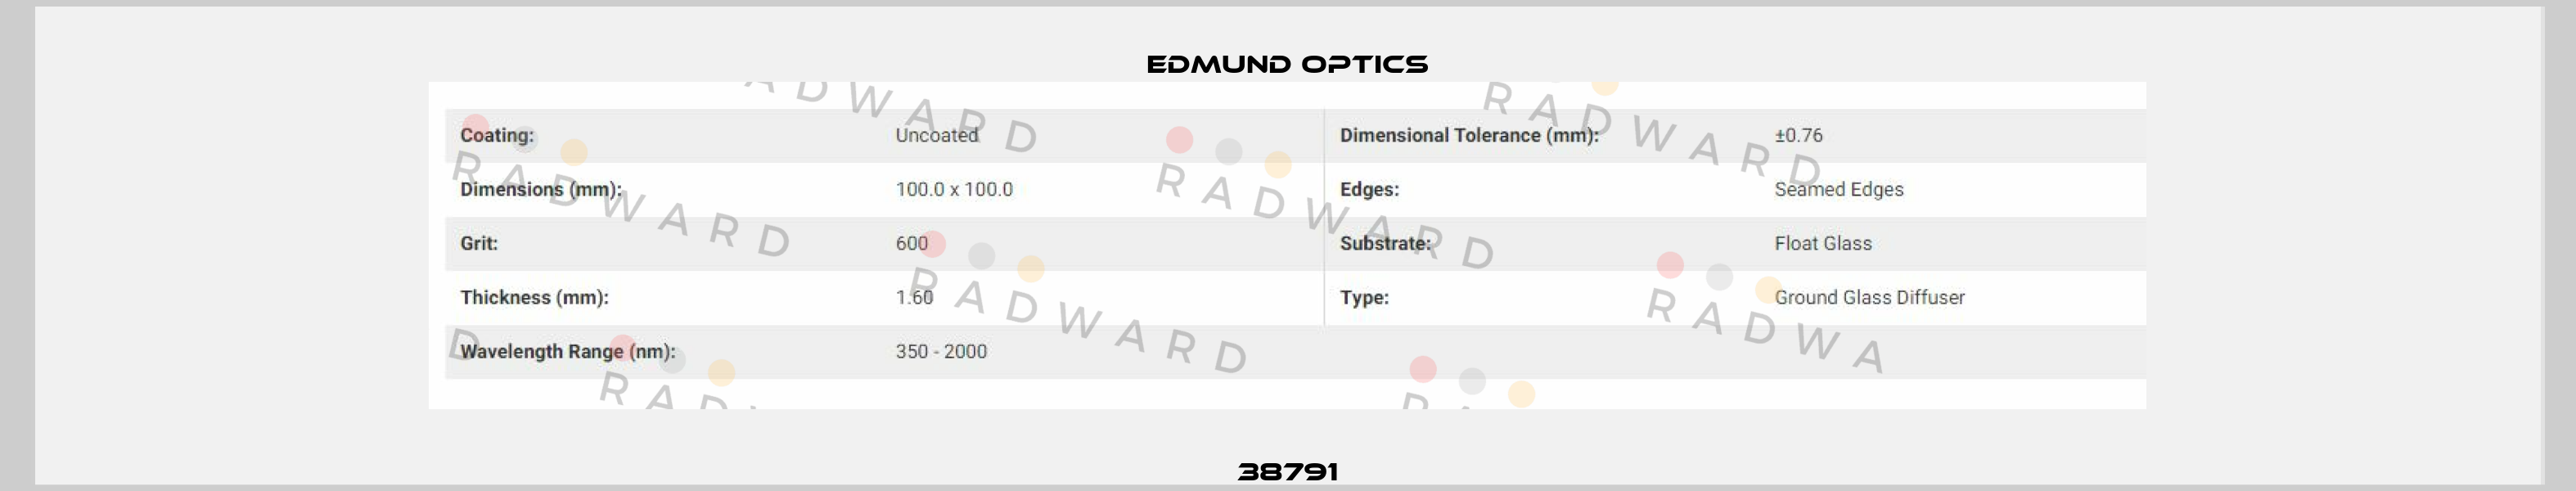 38791 Edmund Optics